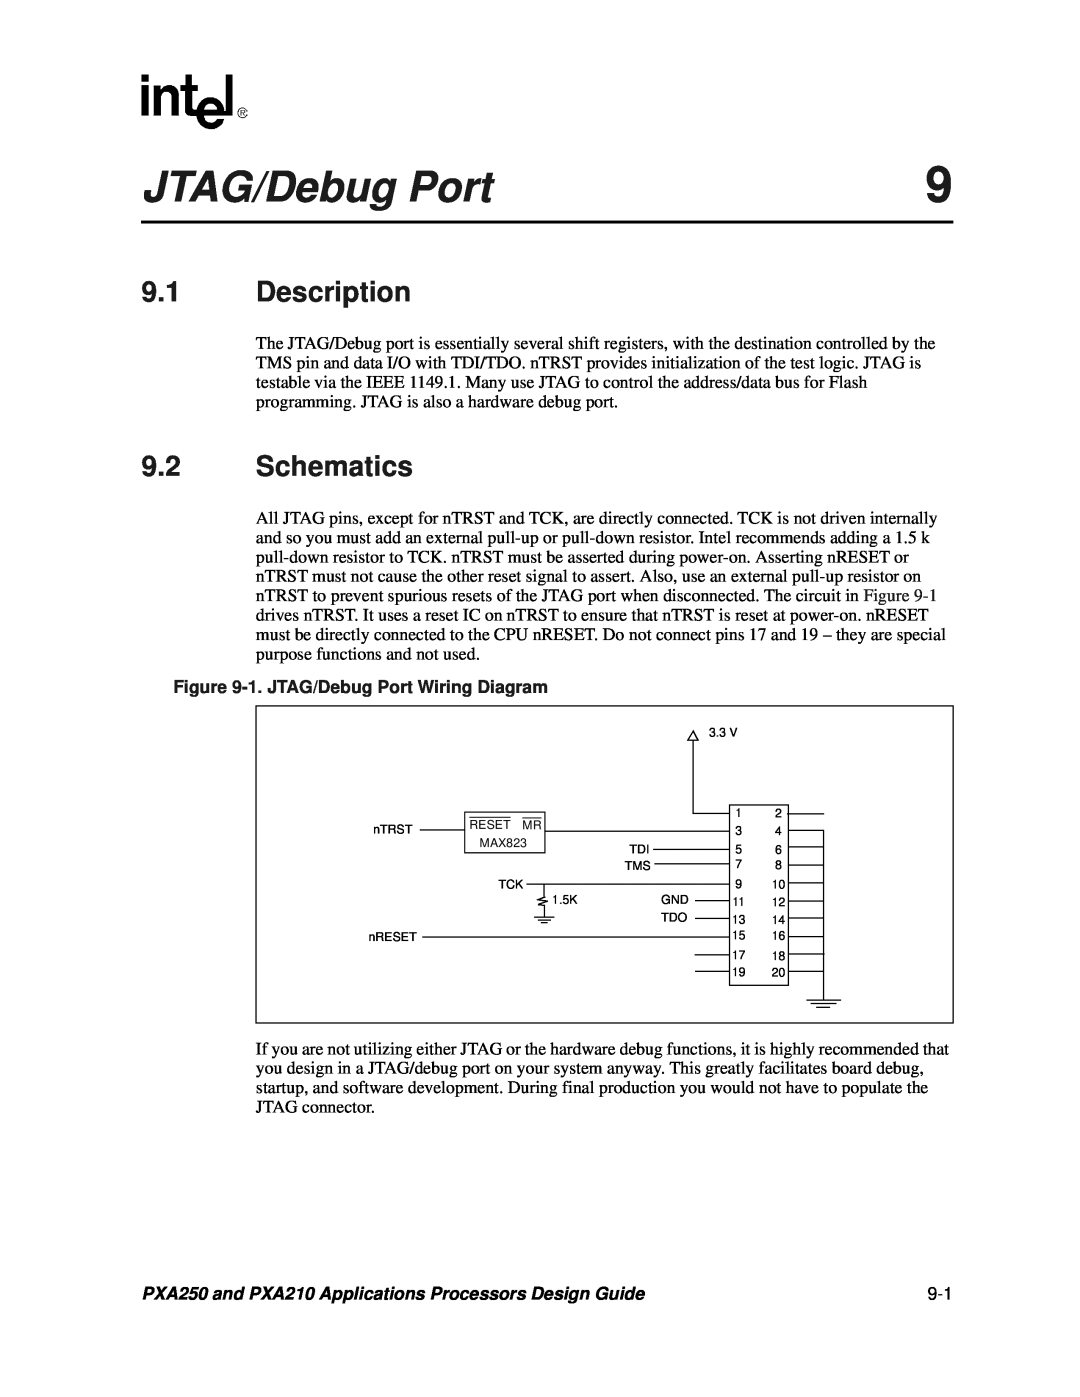 Intel PXA250 and PXA210 manual Description, Schematics, 1. JTAG/Debug Port Wiring Diagram 